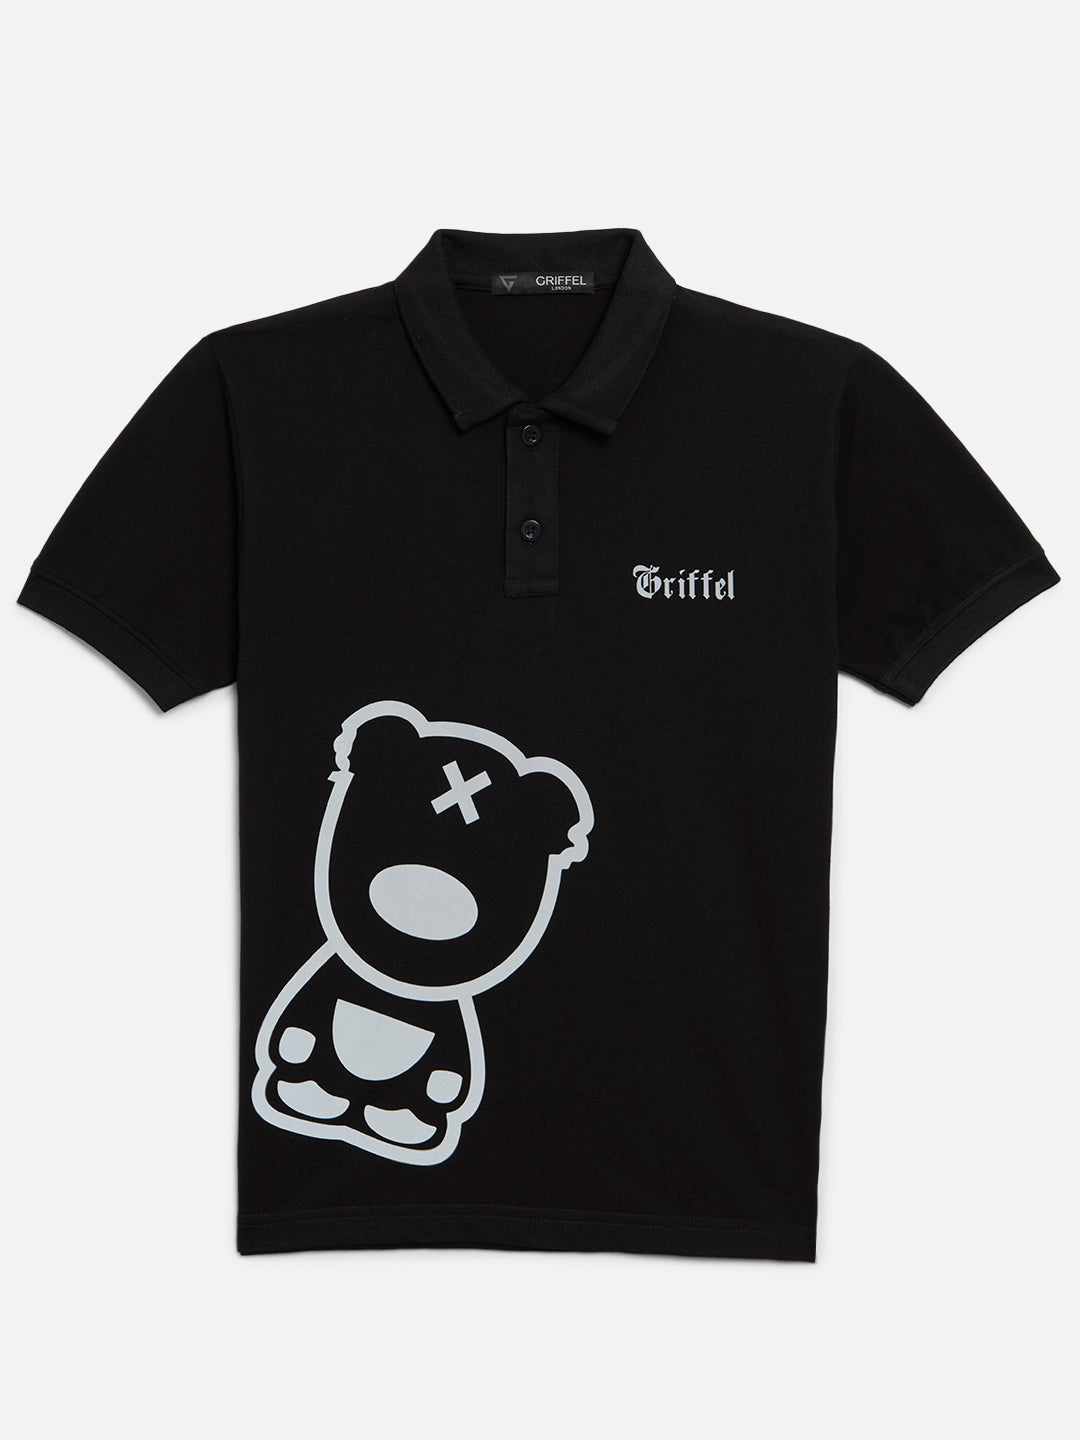 GRIFFEL Girls Kids Black Printed Polo T-shirt - griffel